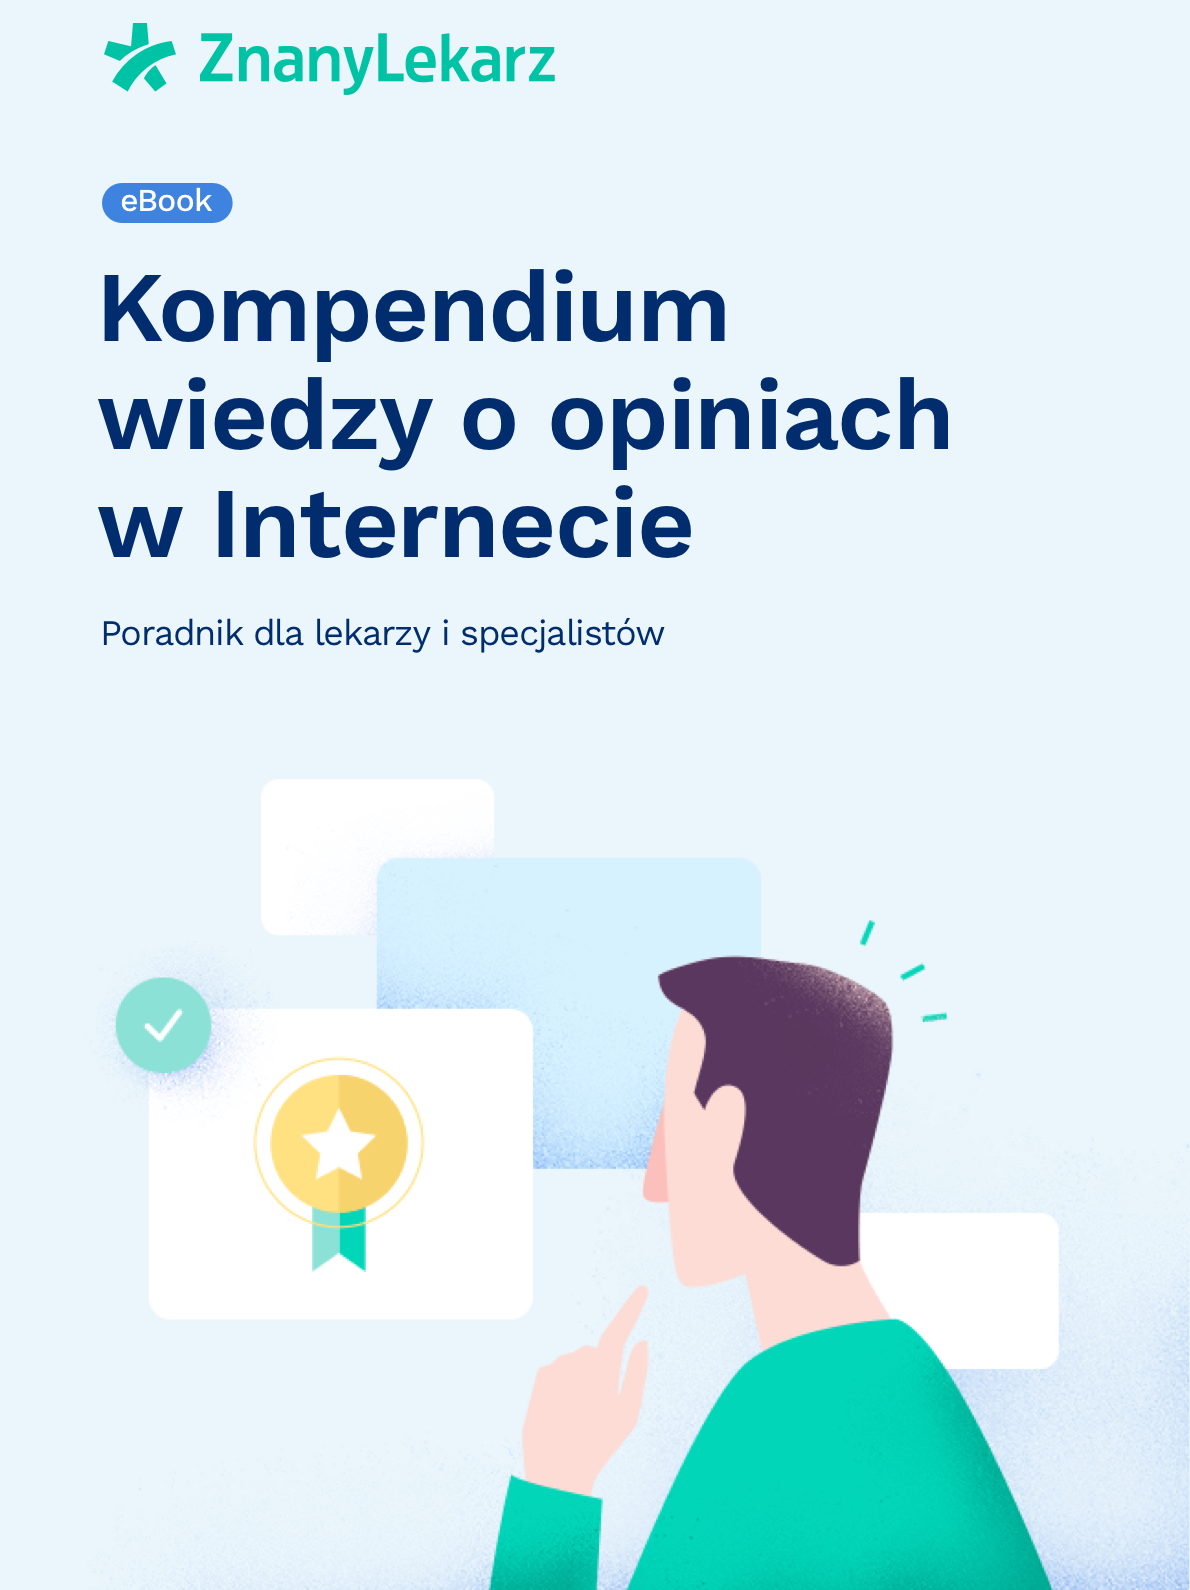 pl-ebook-kompendium-wiedzy-opiniach-w-internecie2